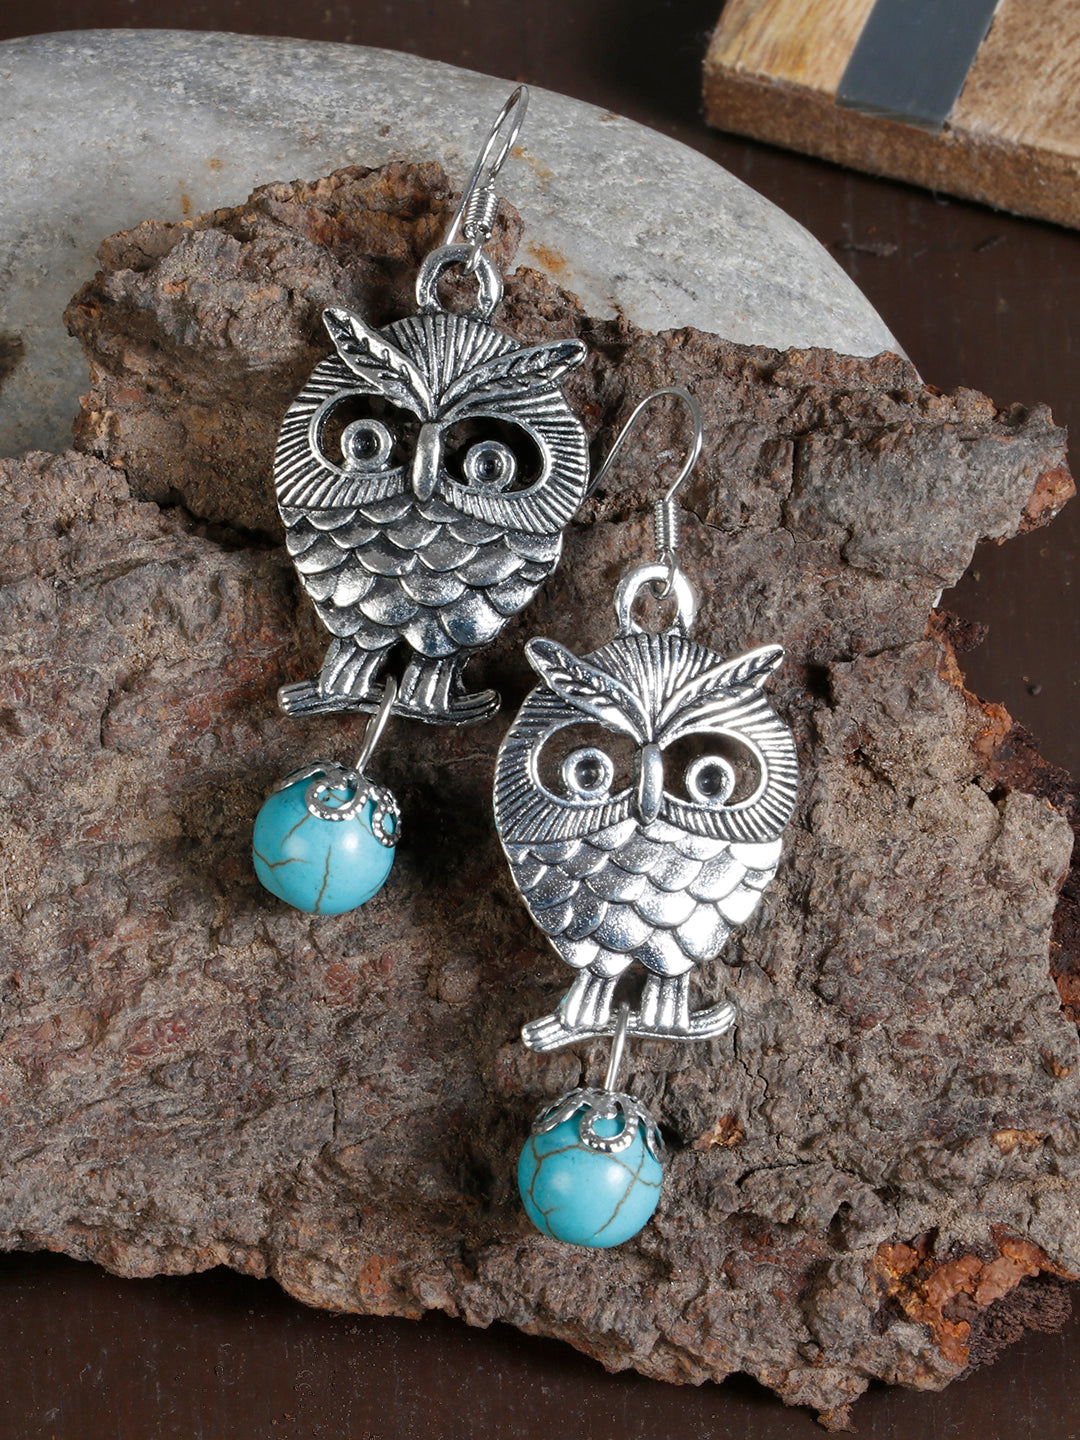 Turquoise Stone Owl Drop & Dangle Earring For Women/Girls